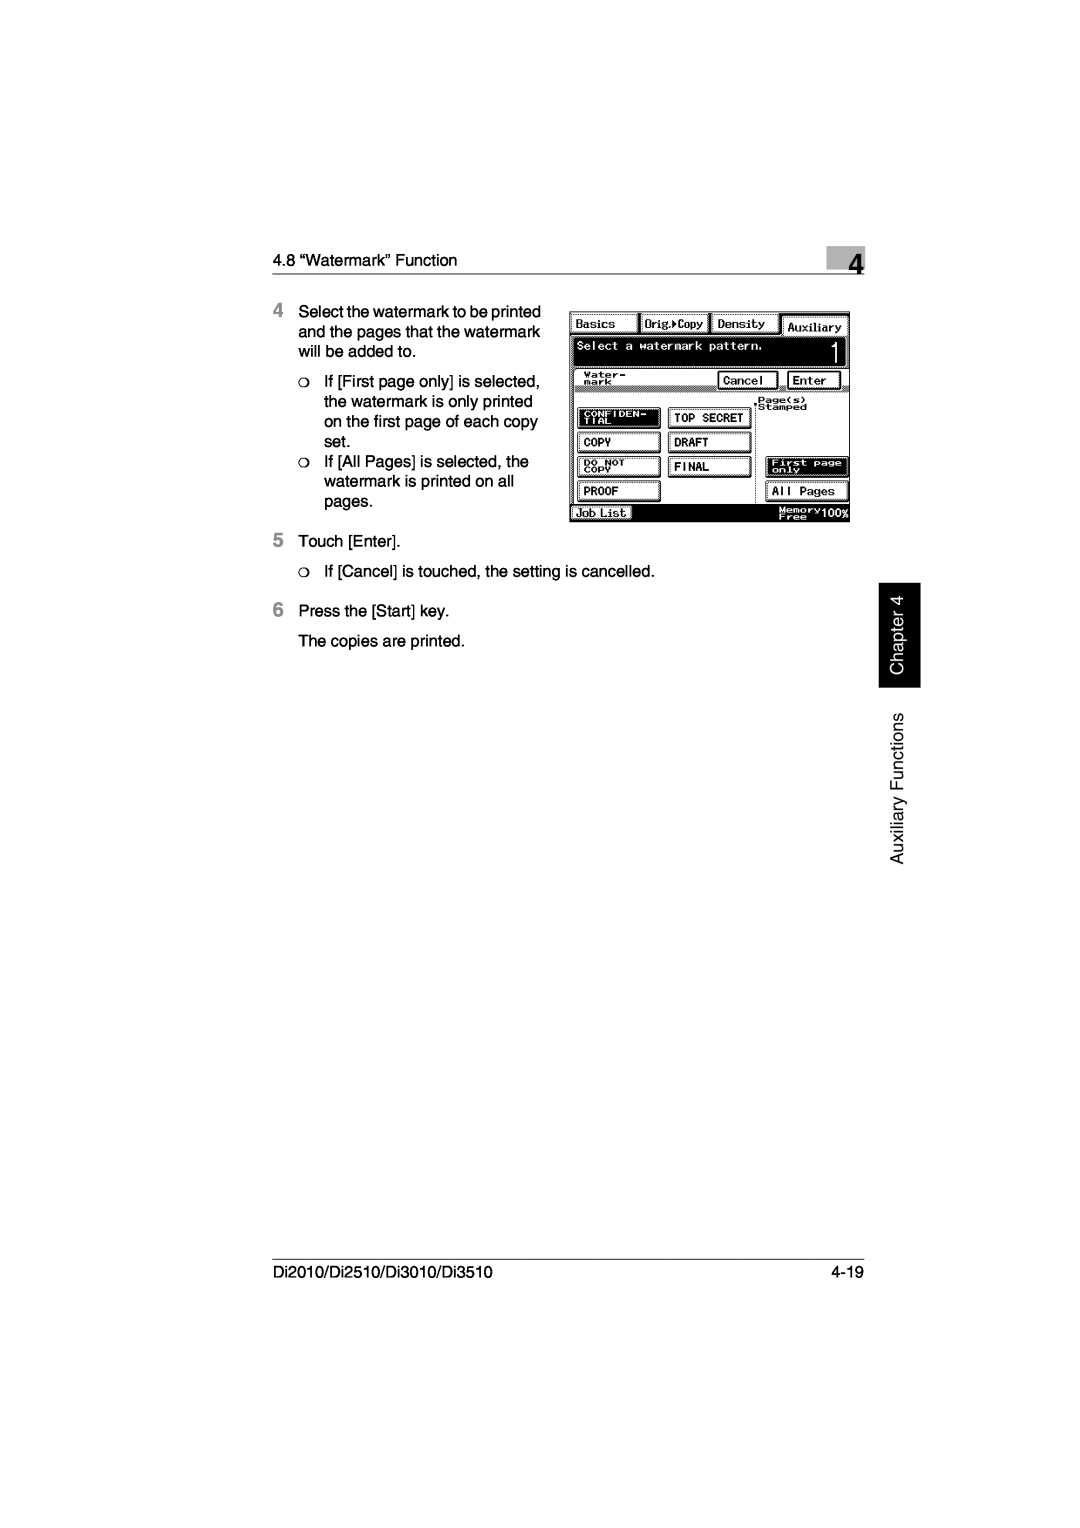 Minolta DI2510, DI2010, DI3010, Di3510 user manual Auxiliary Functions Chapter 